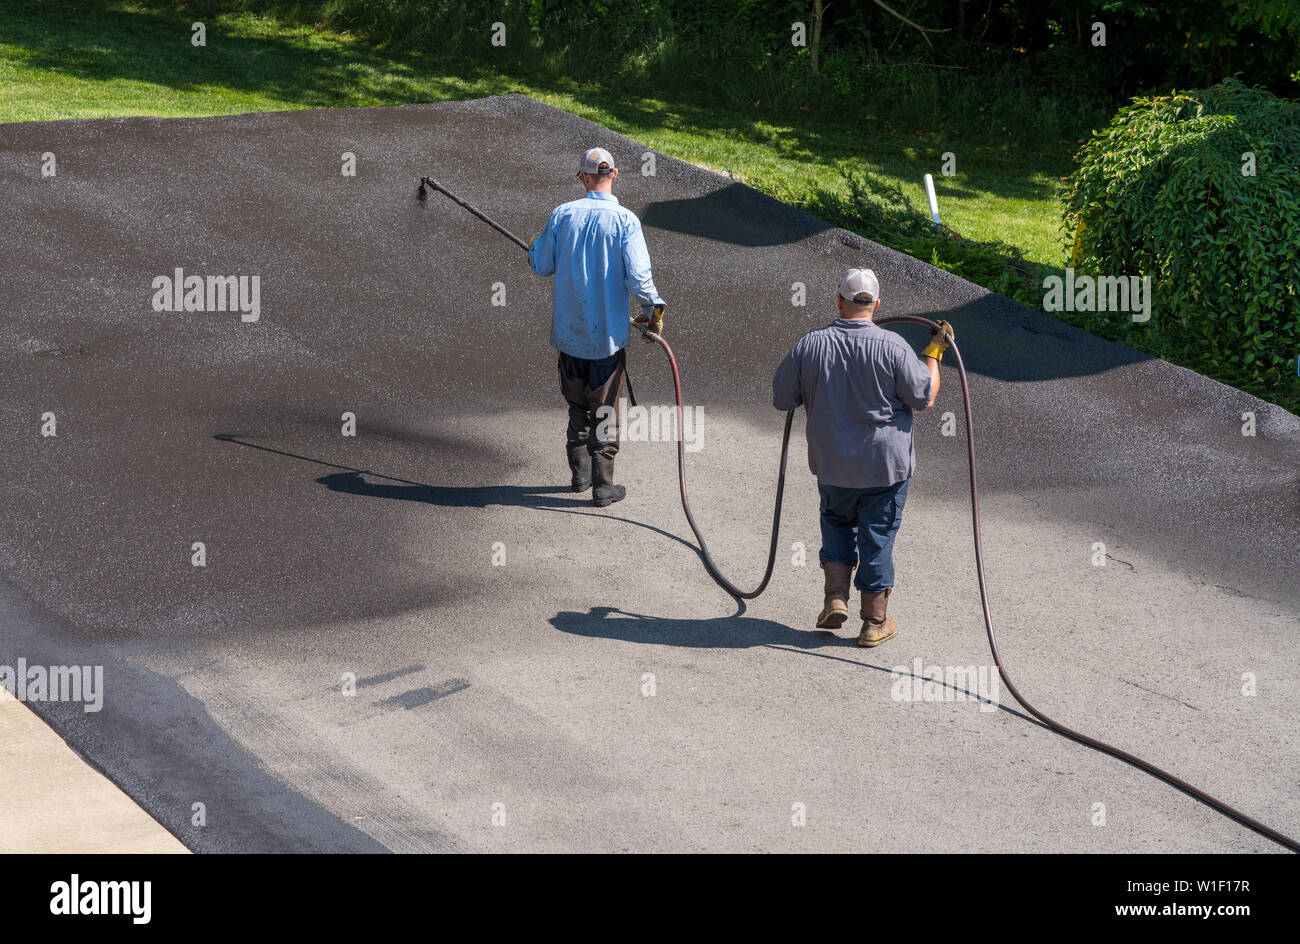 Workers spraying blacktop or asphalt sealer onto roadway Stock Photo